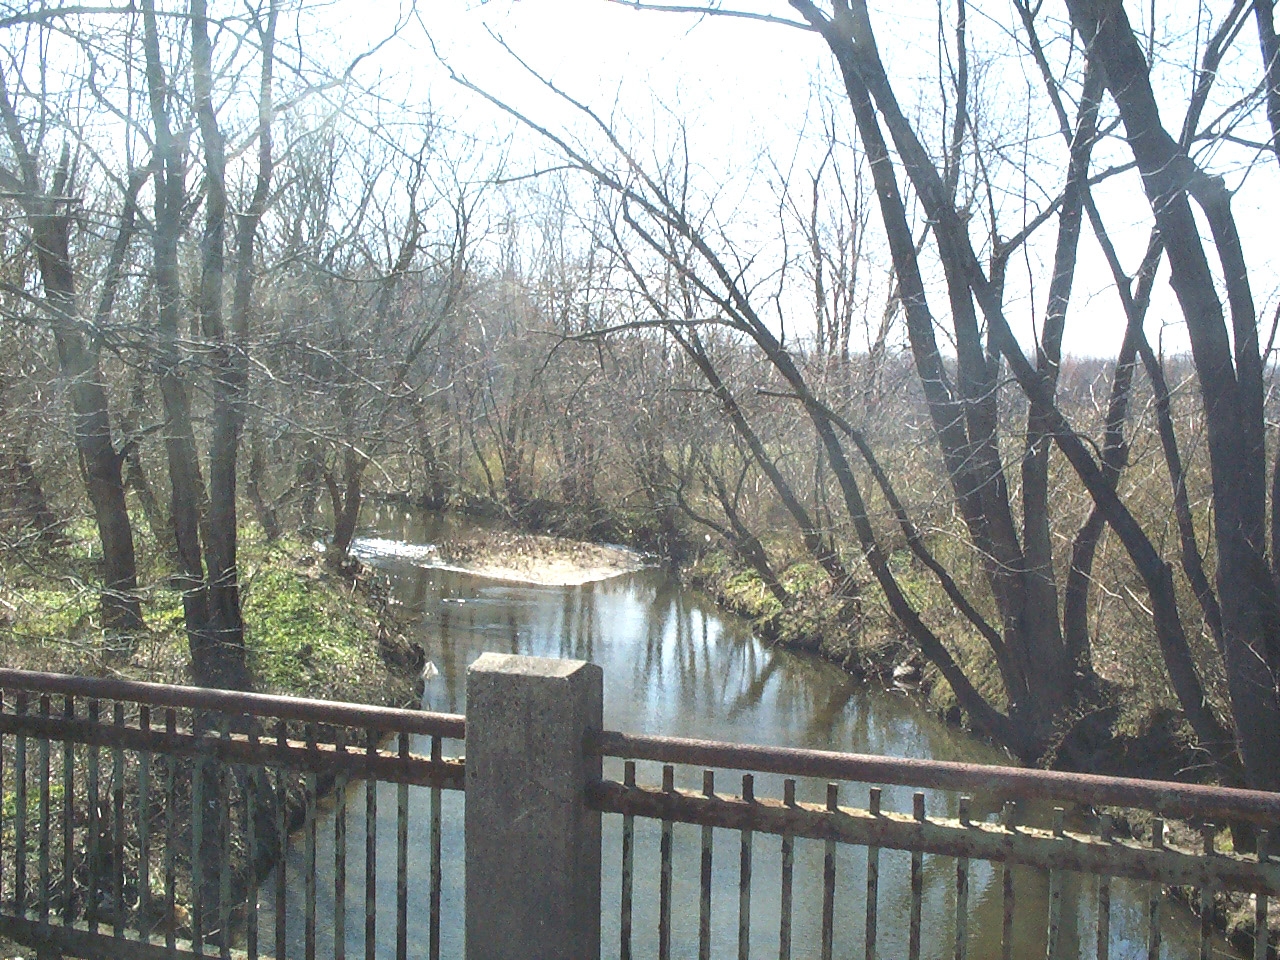 Looking upstream along Shabakunk Creek